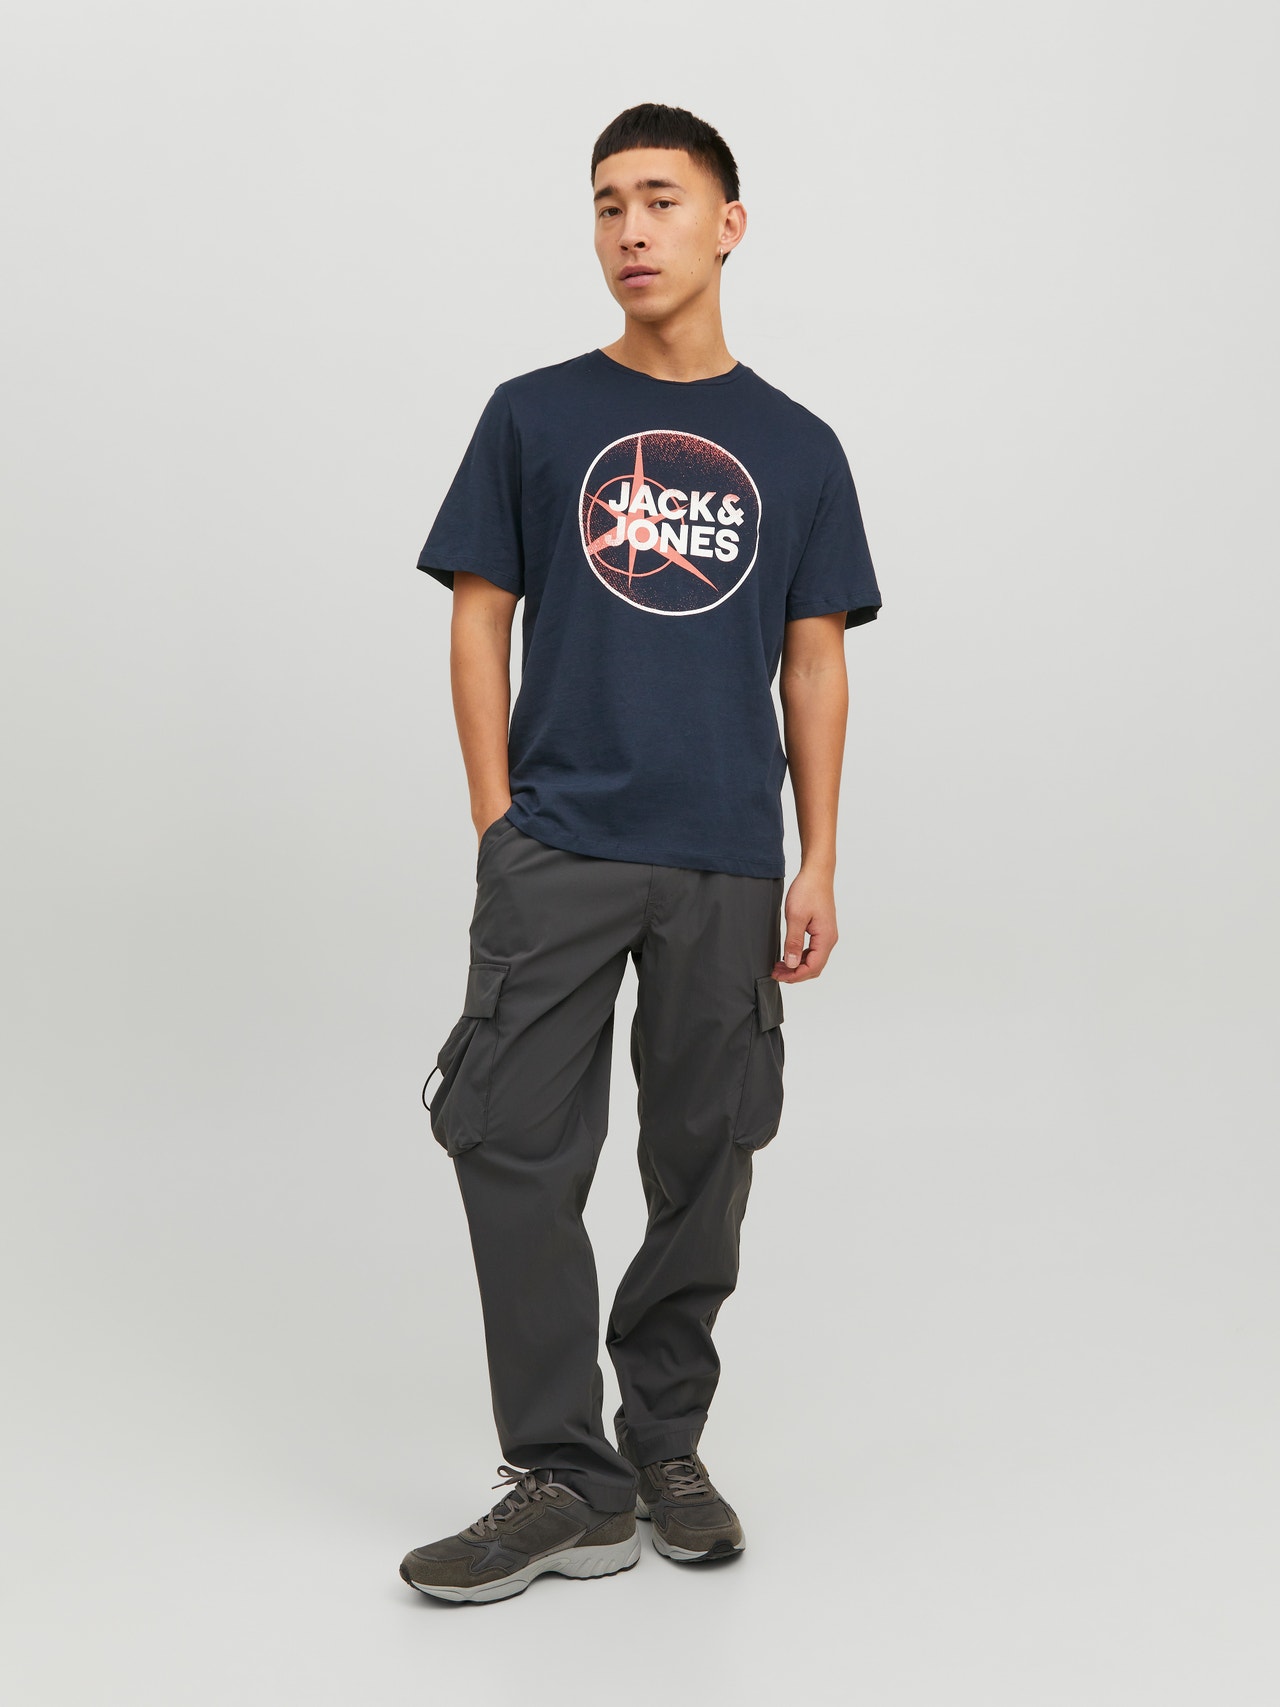 Jack & Jones Logo Ronde hals T-shirt -Navy Blazer - 12234347